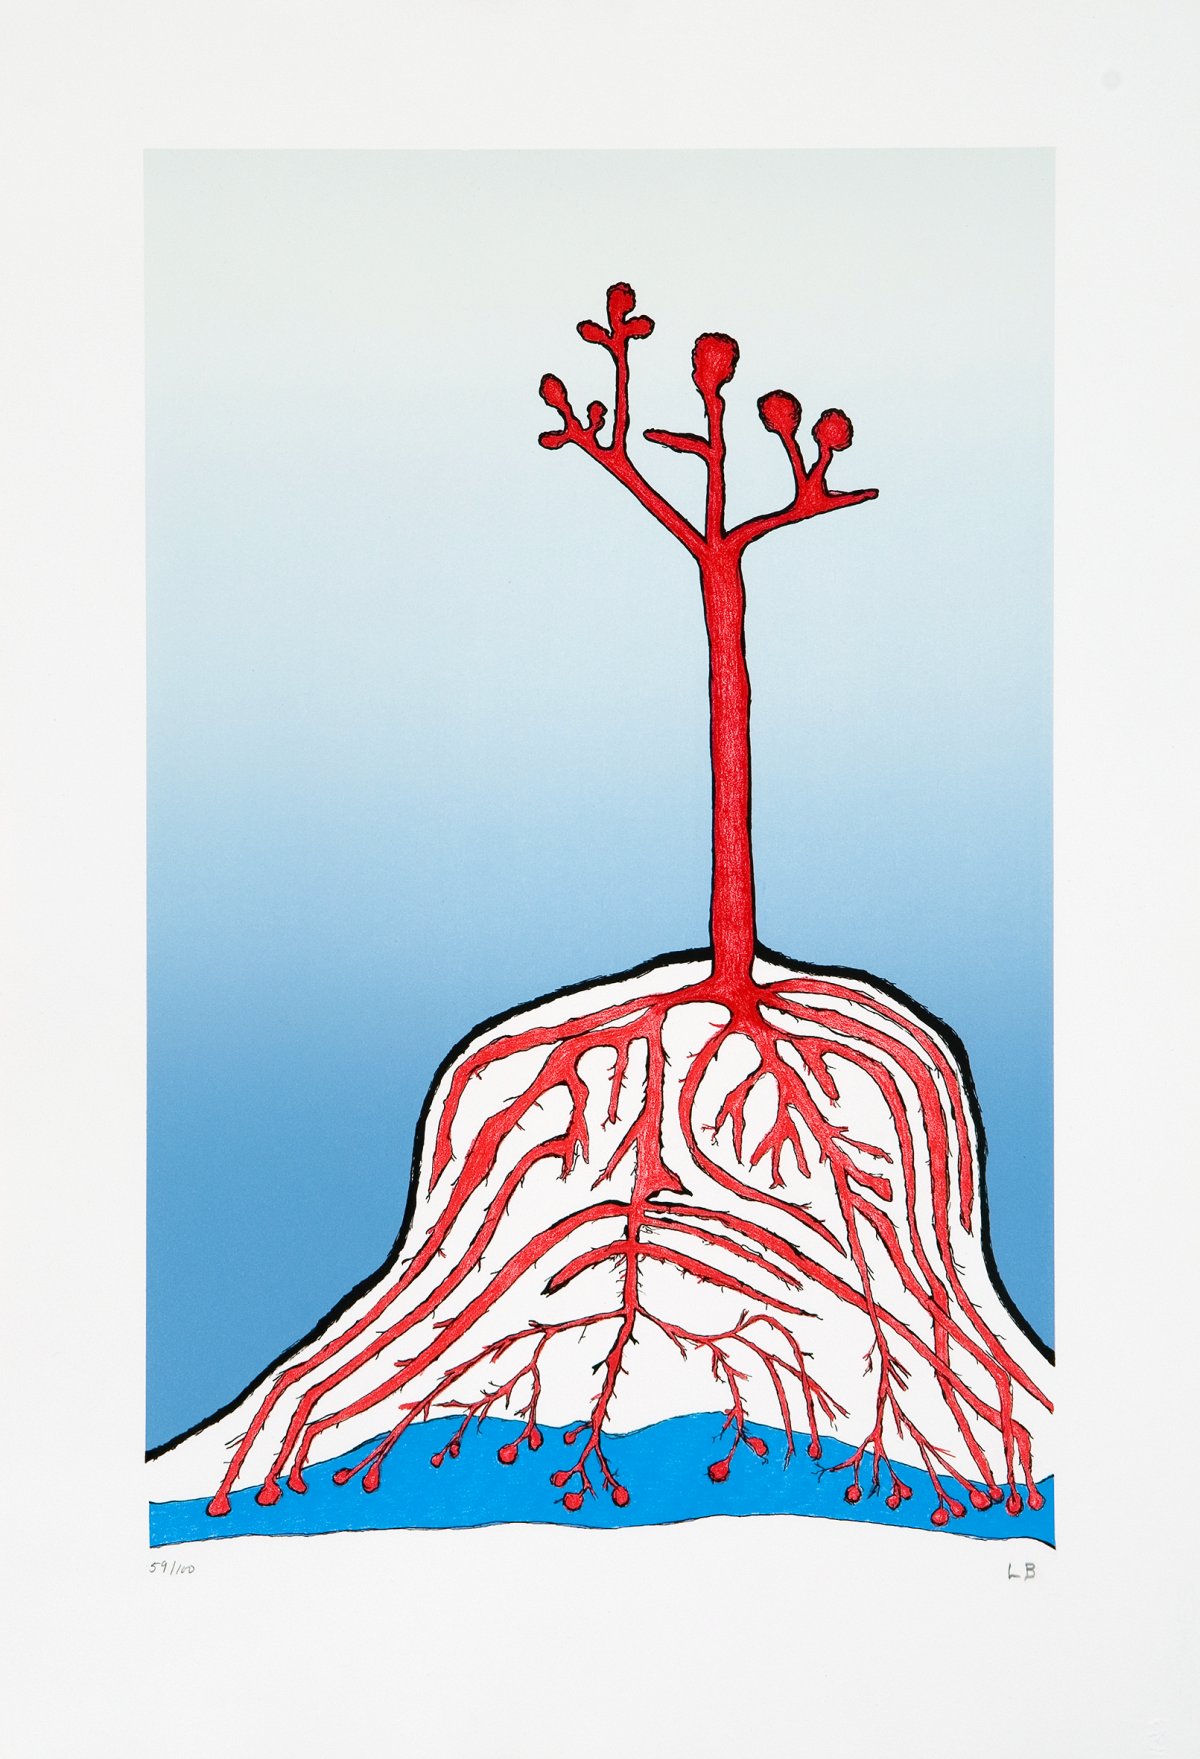 Louise Bourgeois, Ainu tree, 2000